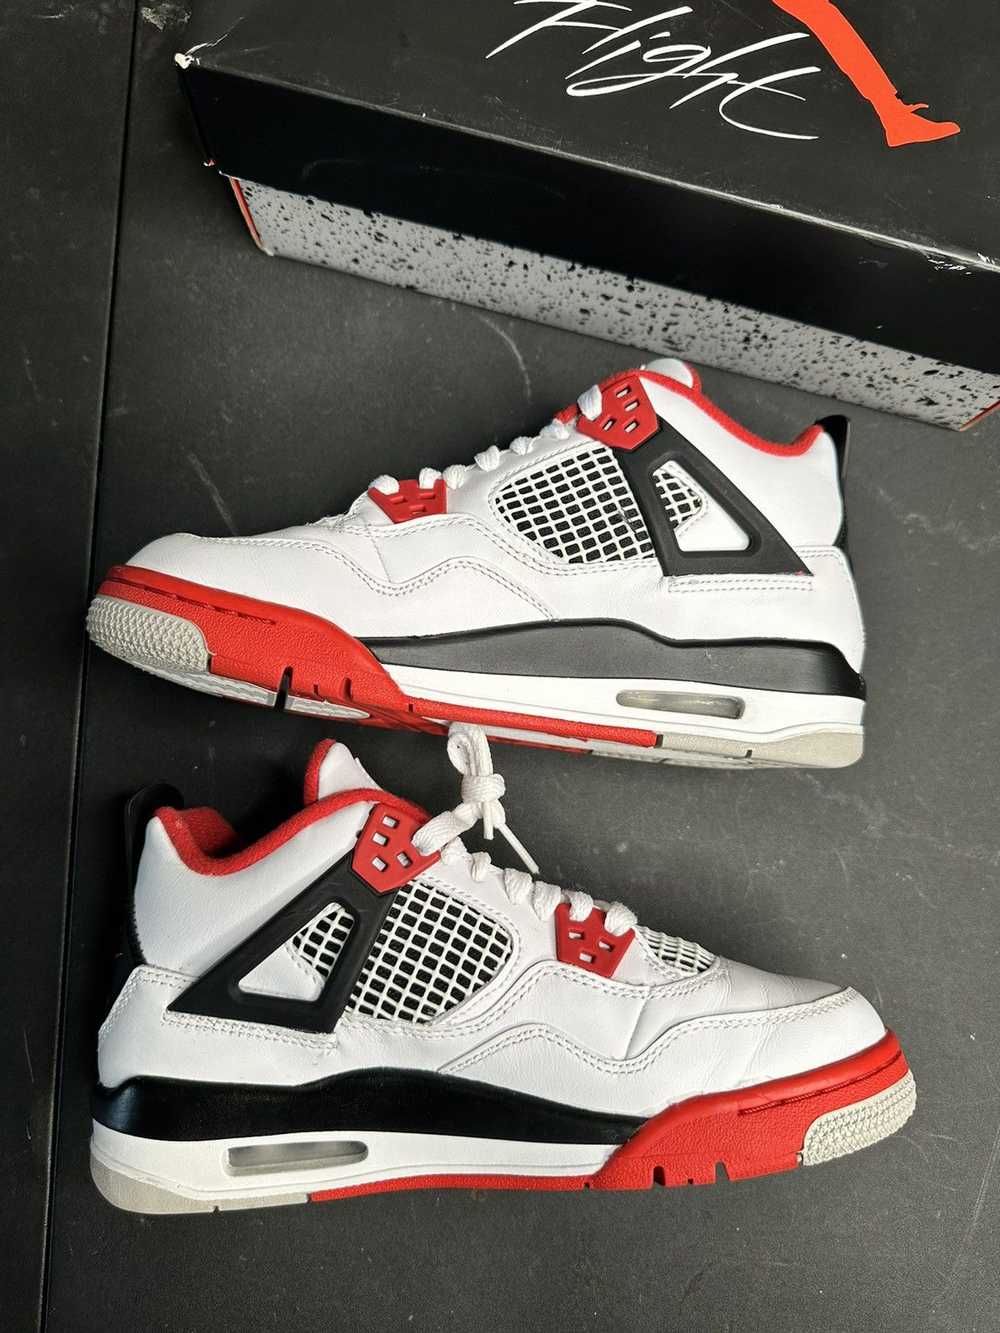 Jordan Brand × Nike Jordan 4 Fire red gs - image 2